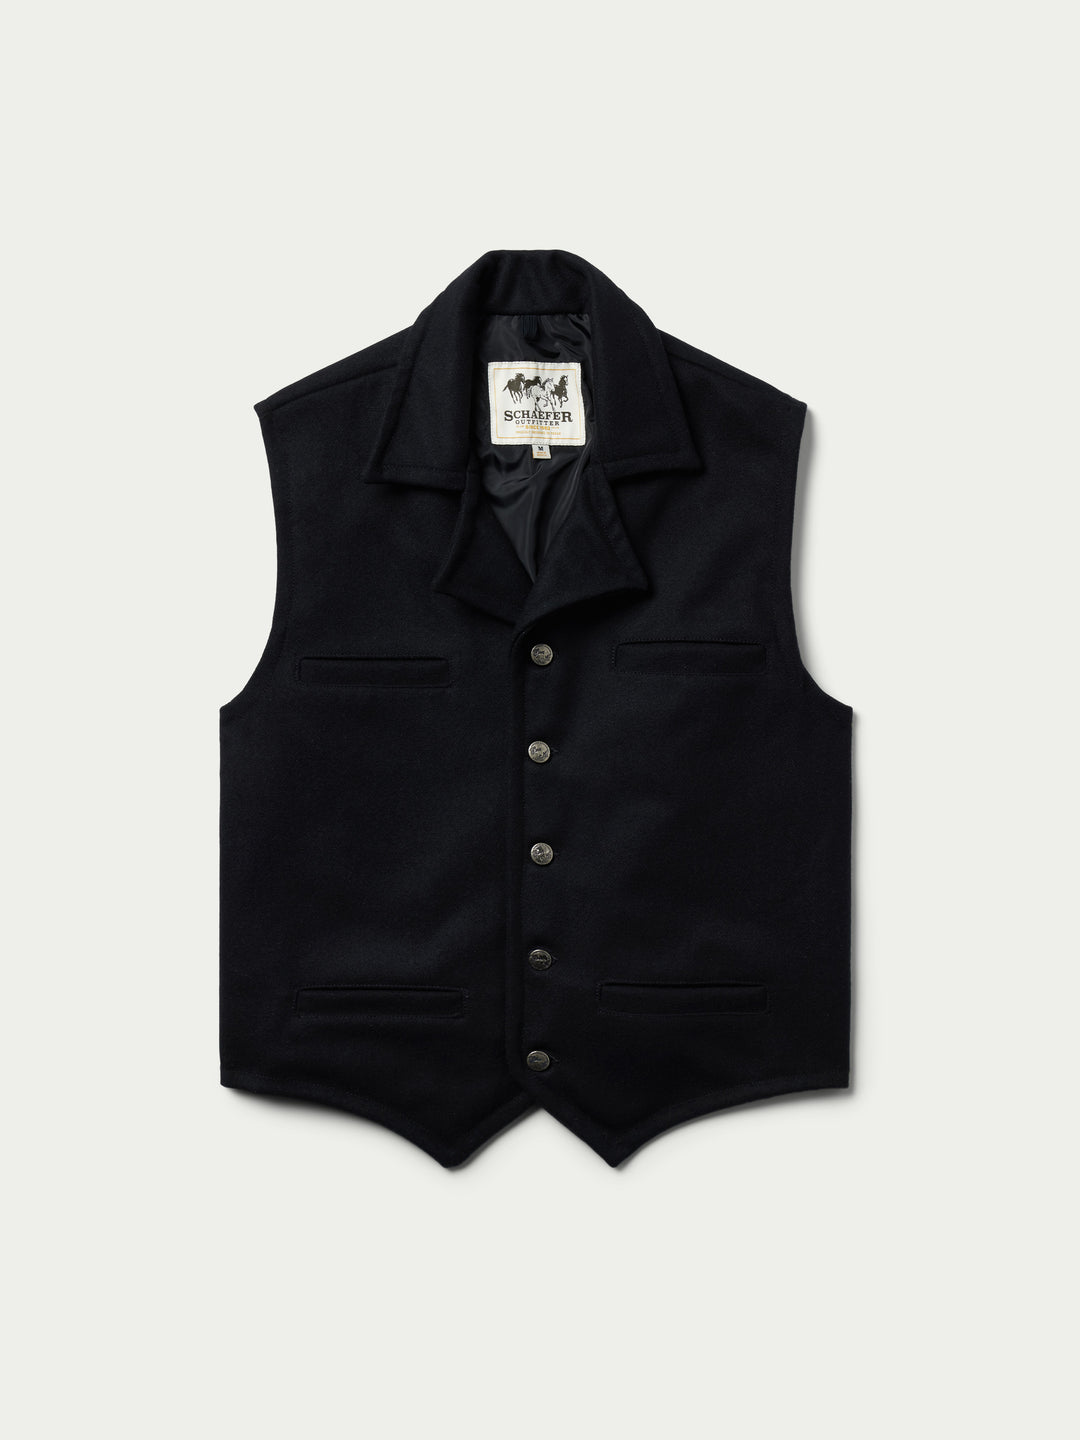 Cattle Baron Wool Vest - Schaefer Outfitter